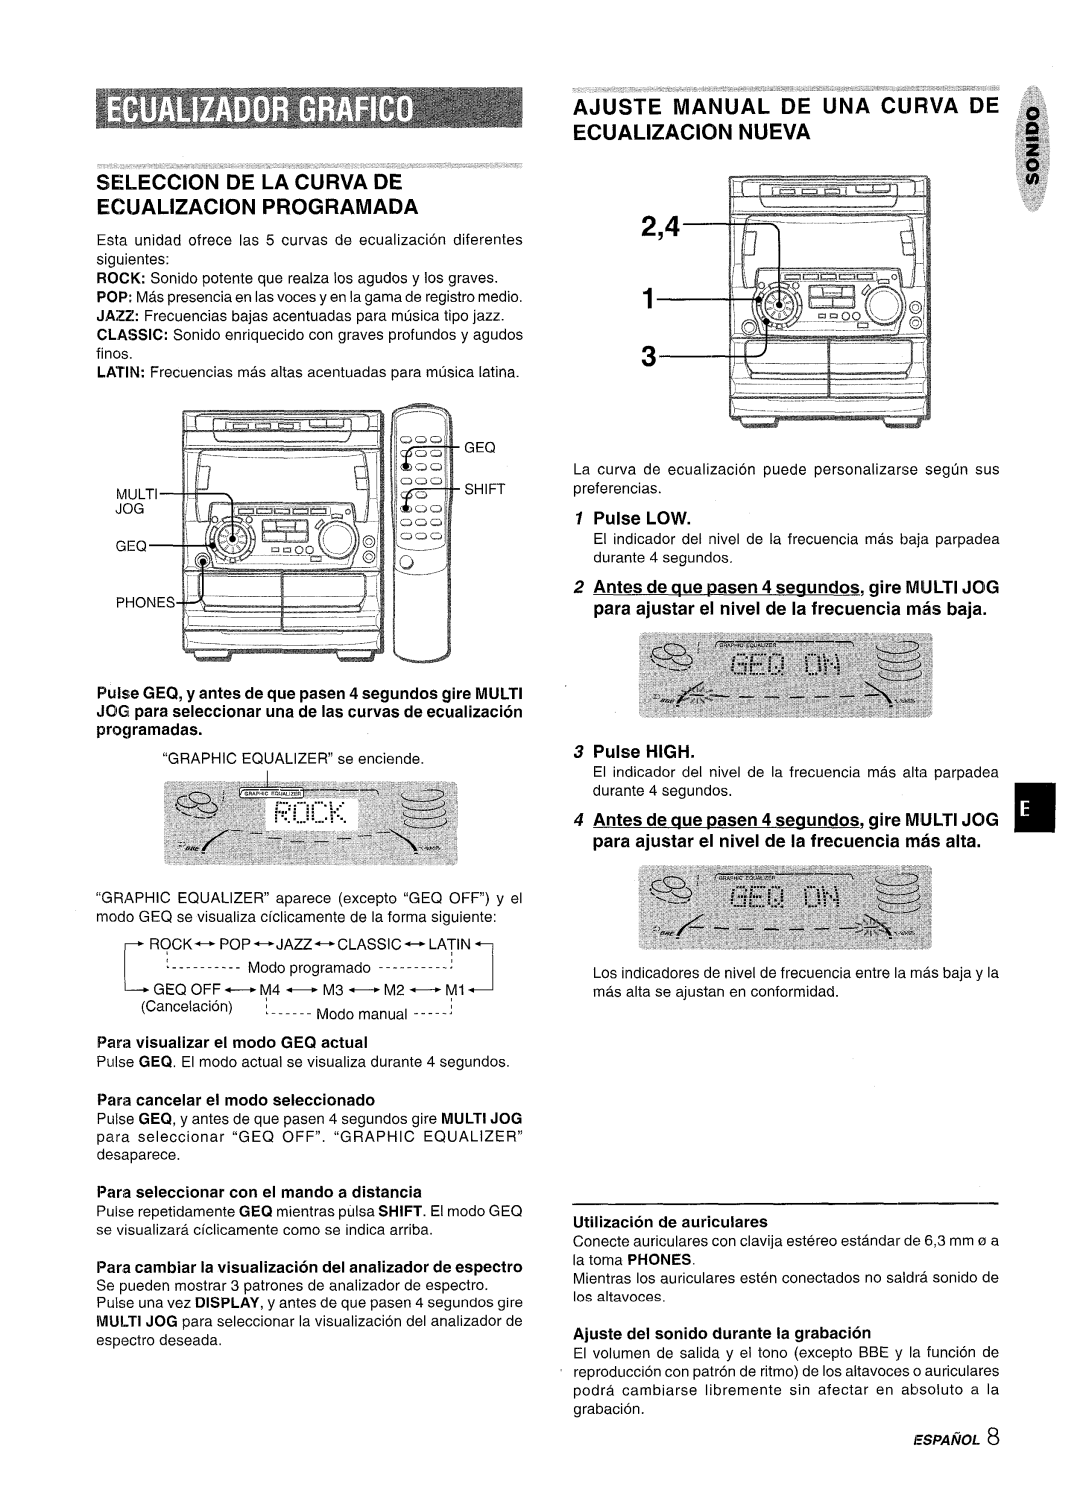 Sony NSX-A707 manual SELECCION” DE LAiURtiA DE” “”“’” ECUALIZACION PROGRAMADA, Pulse LOW, 1 -t, Utilization de auriculares 